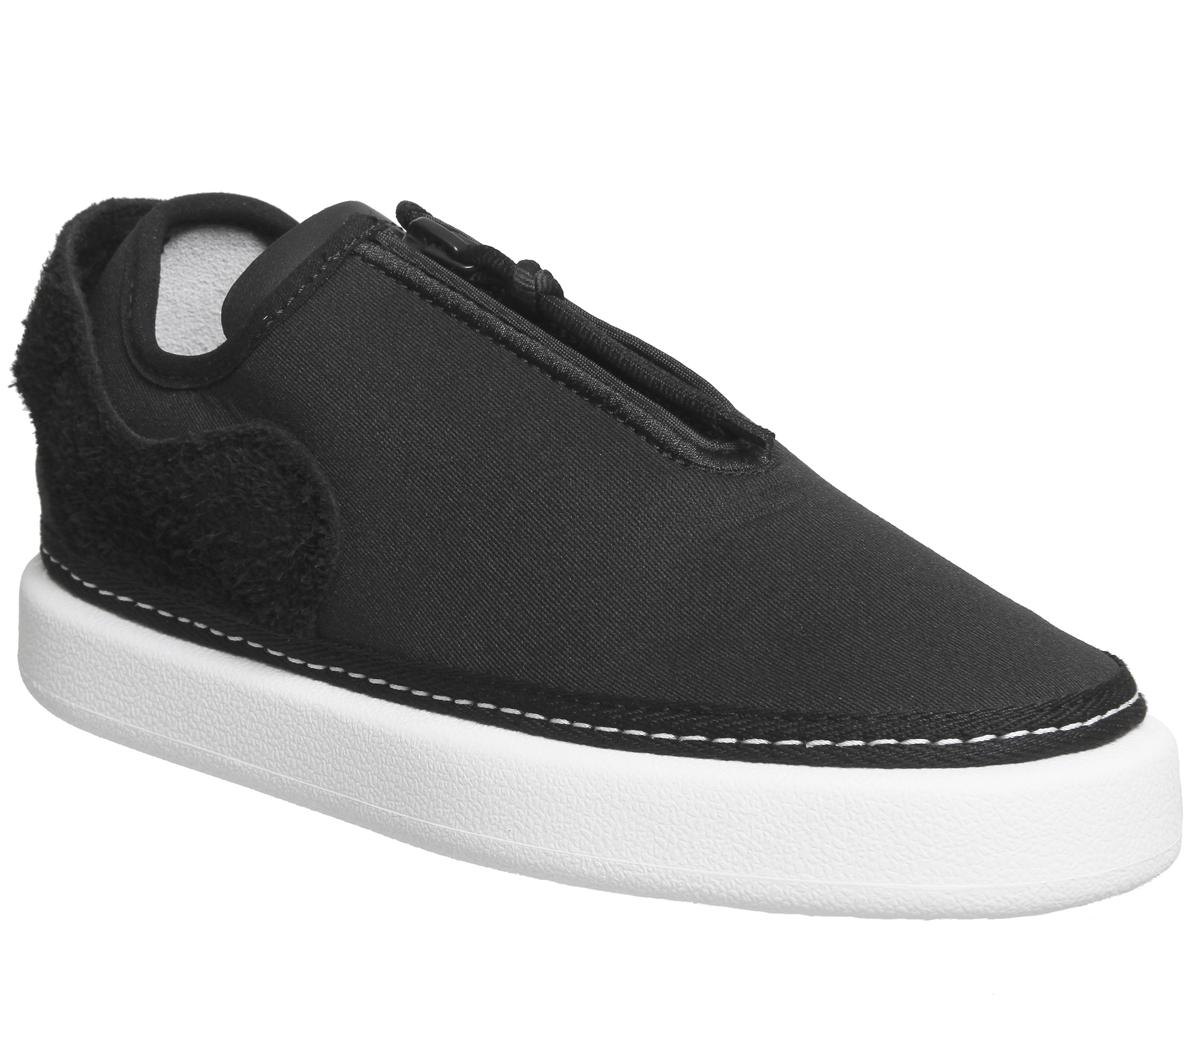 adidas Y3 Y3 Comfort Zip Black White - Hers trainers